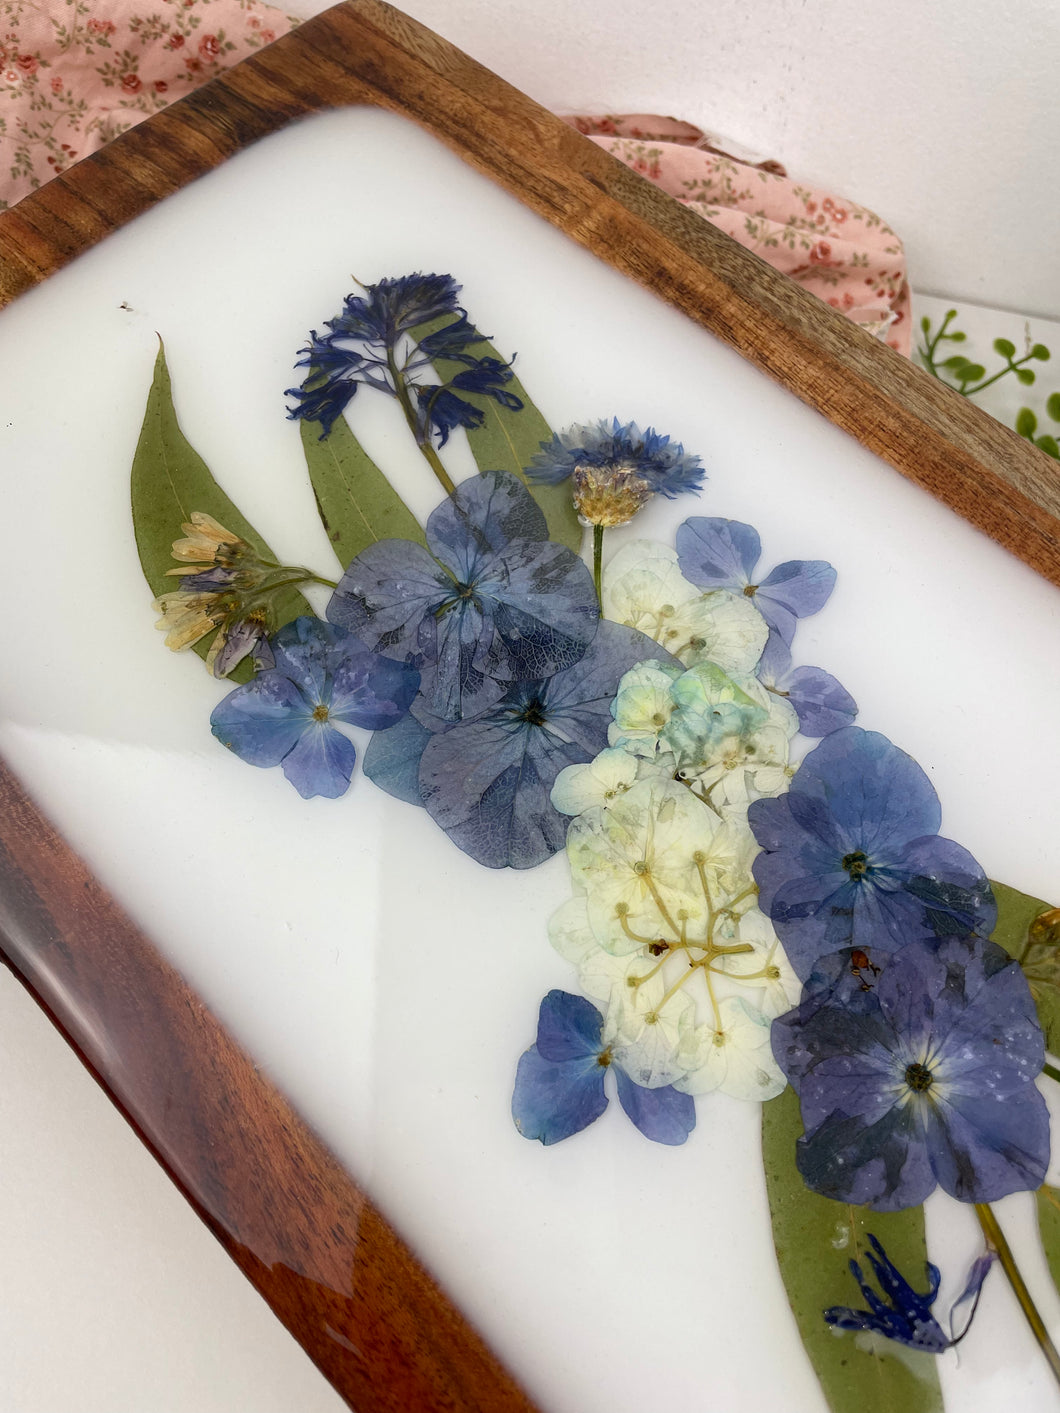 Pressed flower wooden tray/charcuterie board